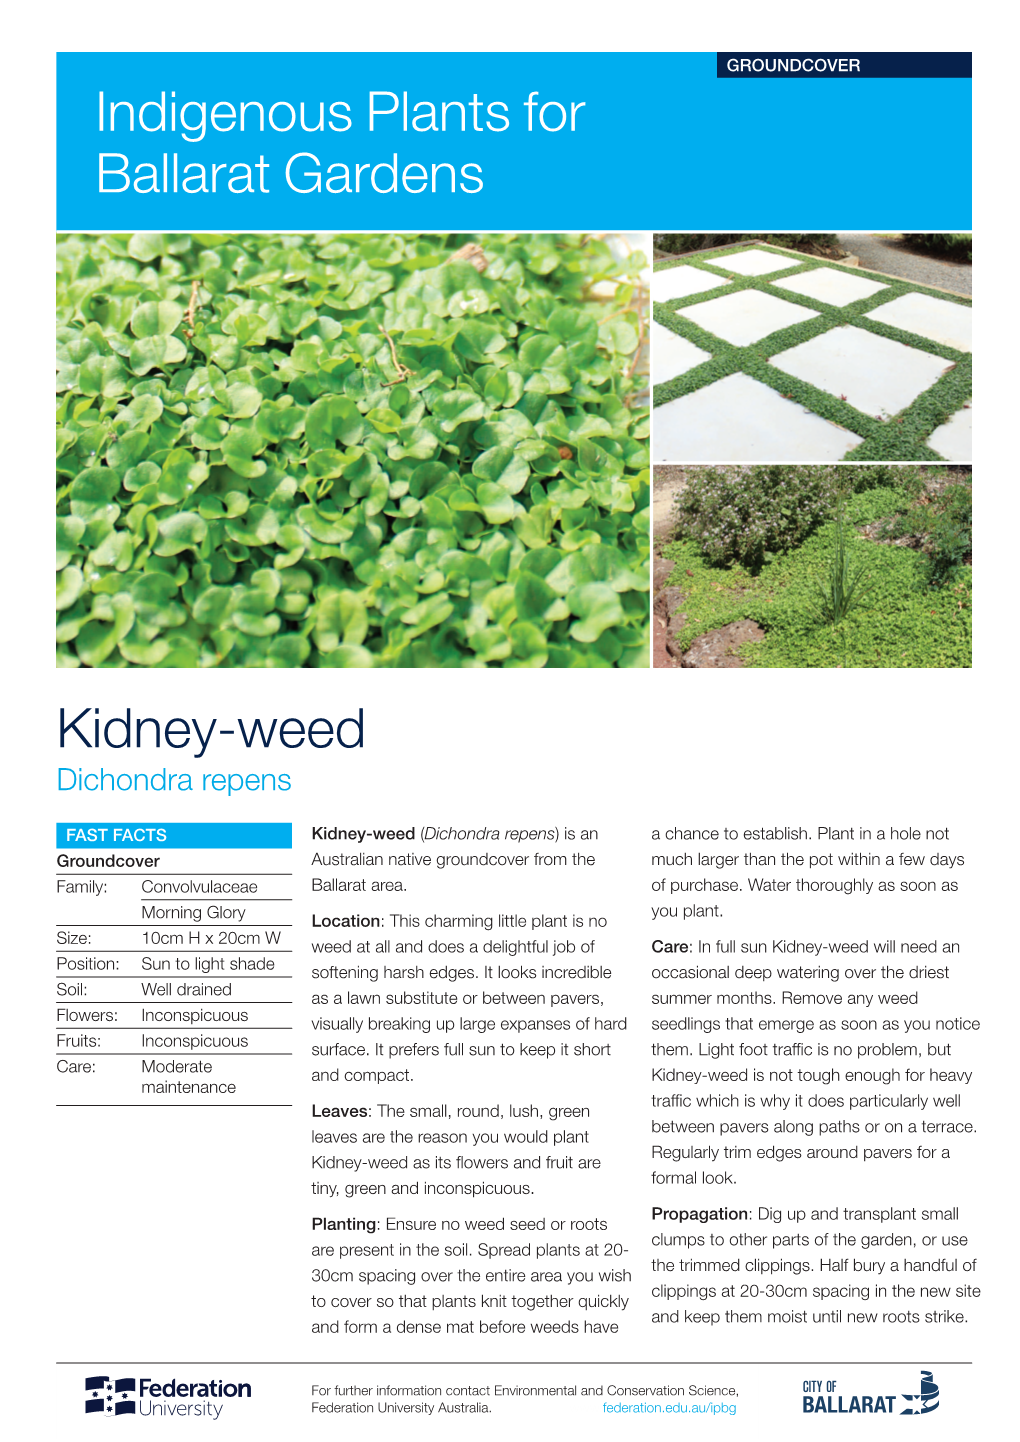 Kidney-Weed Indigenous Plants for Ballarat Gardens